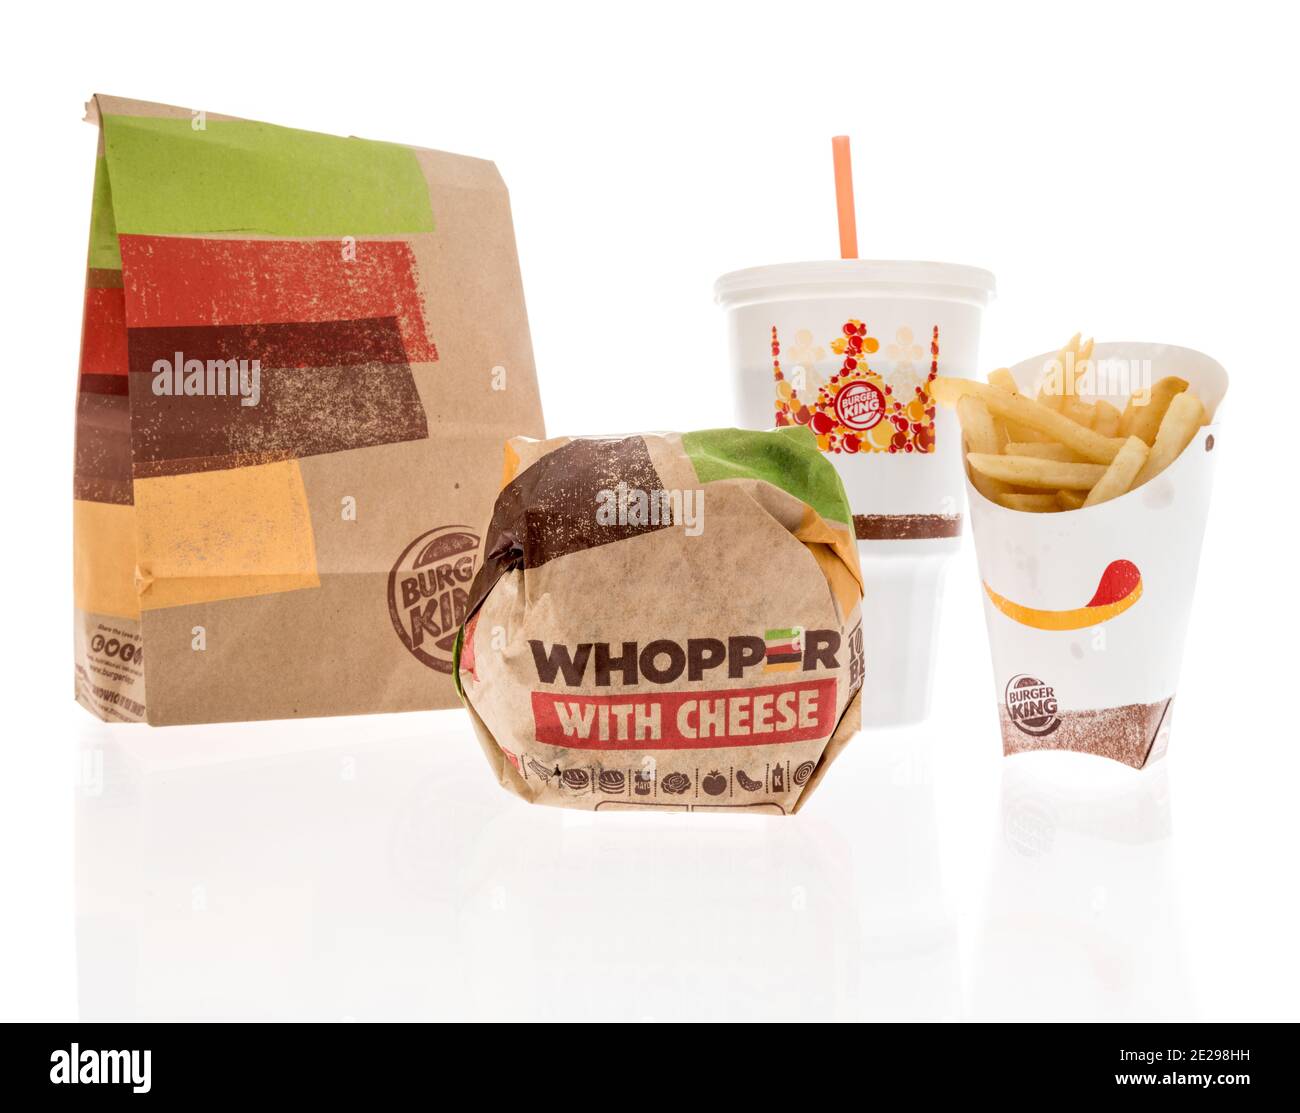 Burger king Imágenes recortadas de stock - Alamy